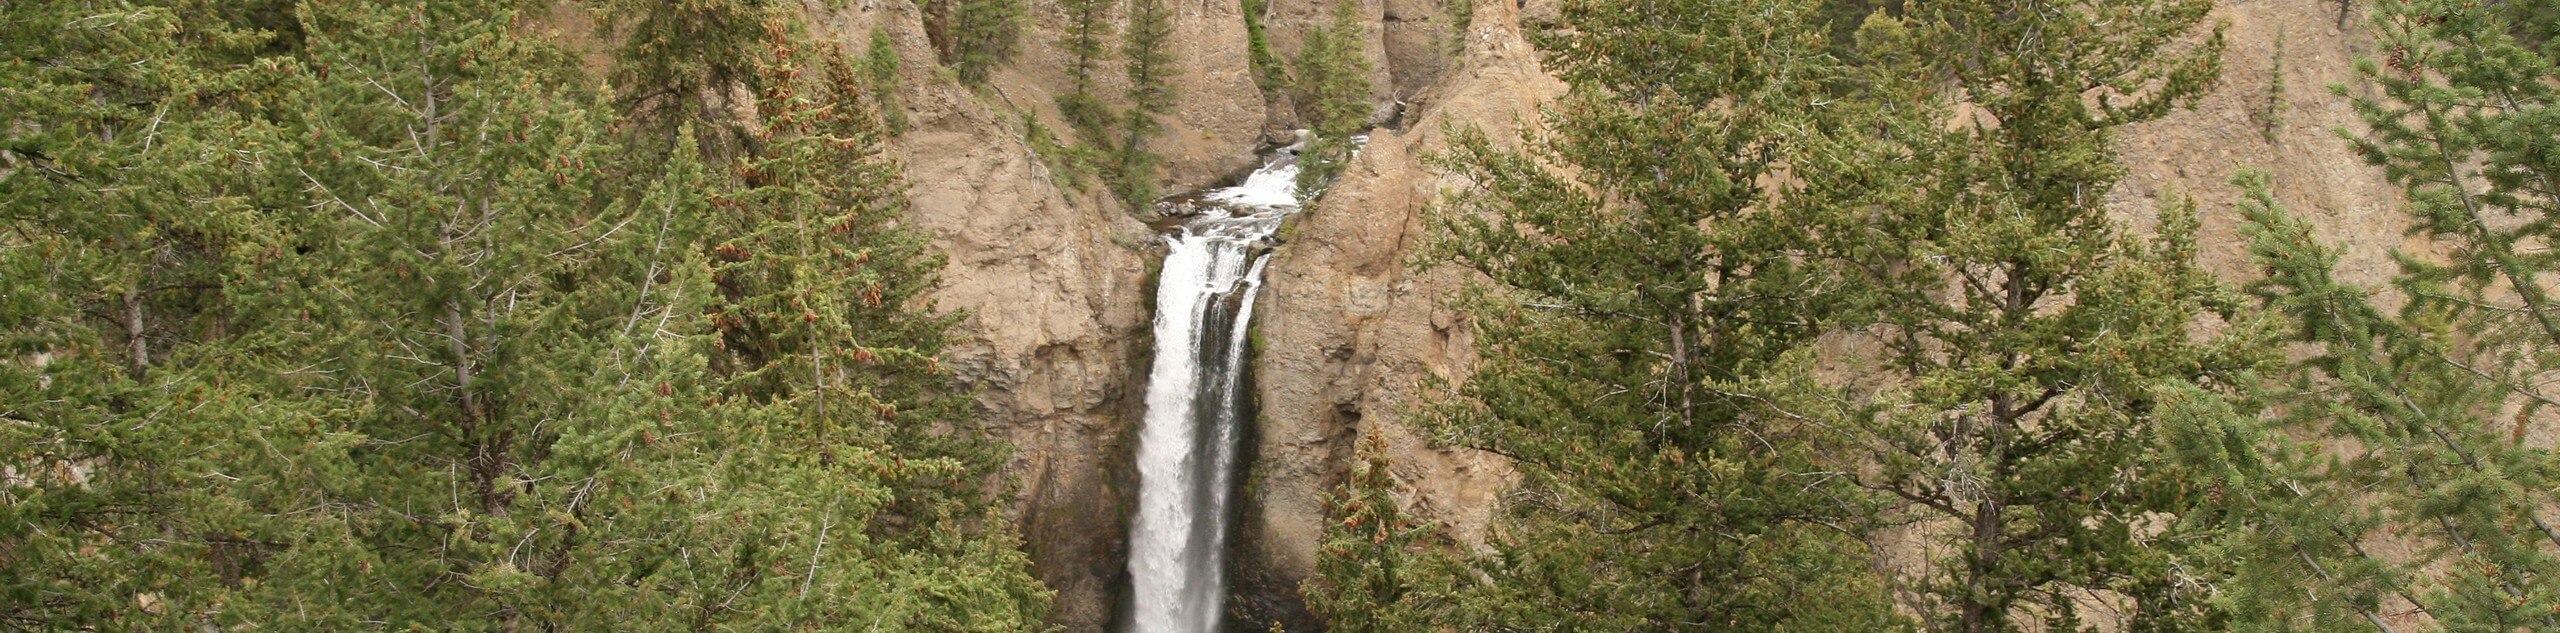 Tower Falls Trail